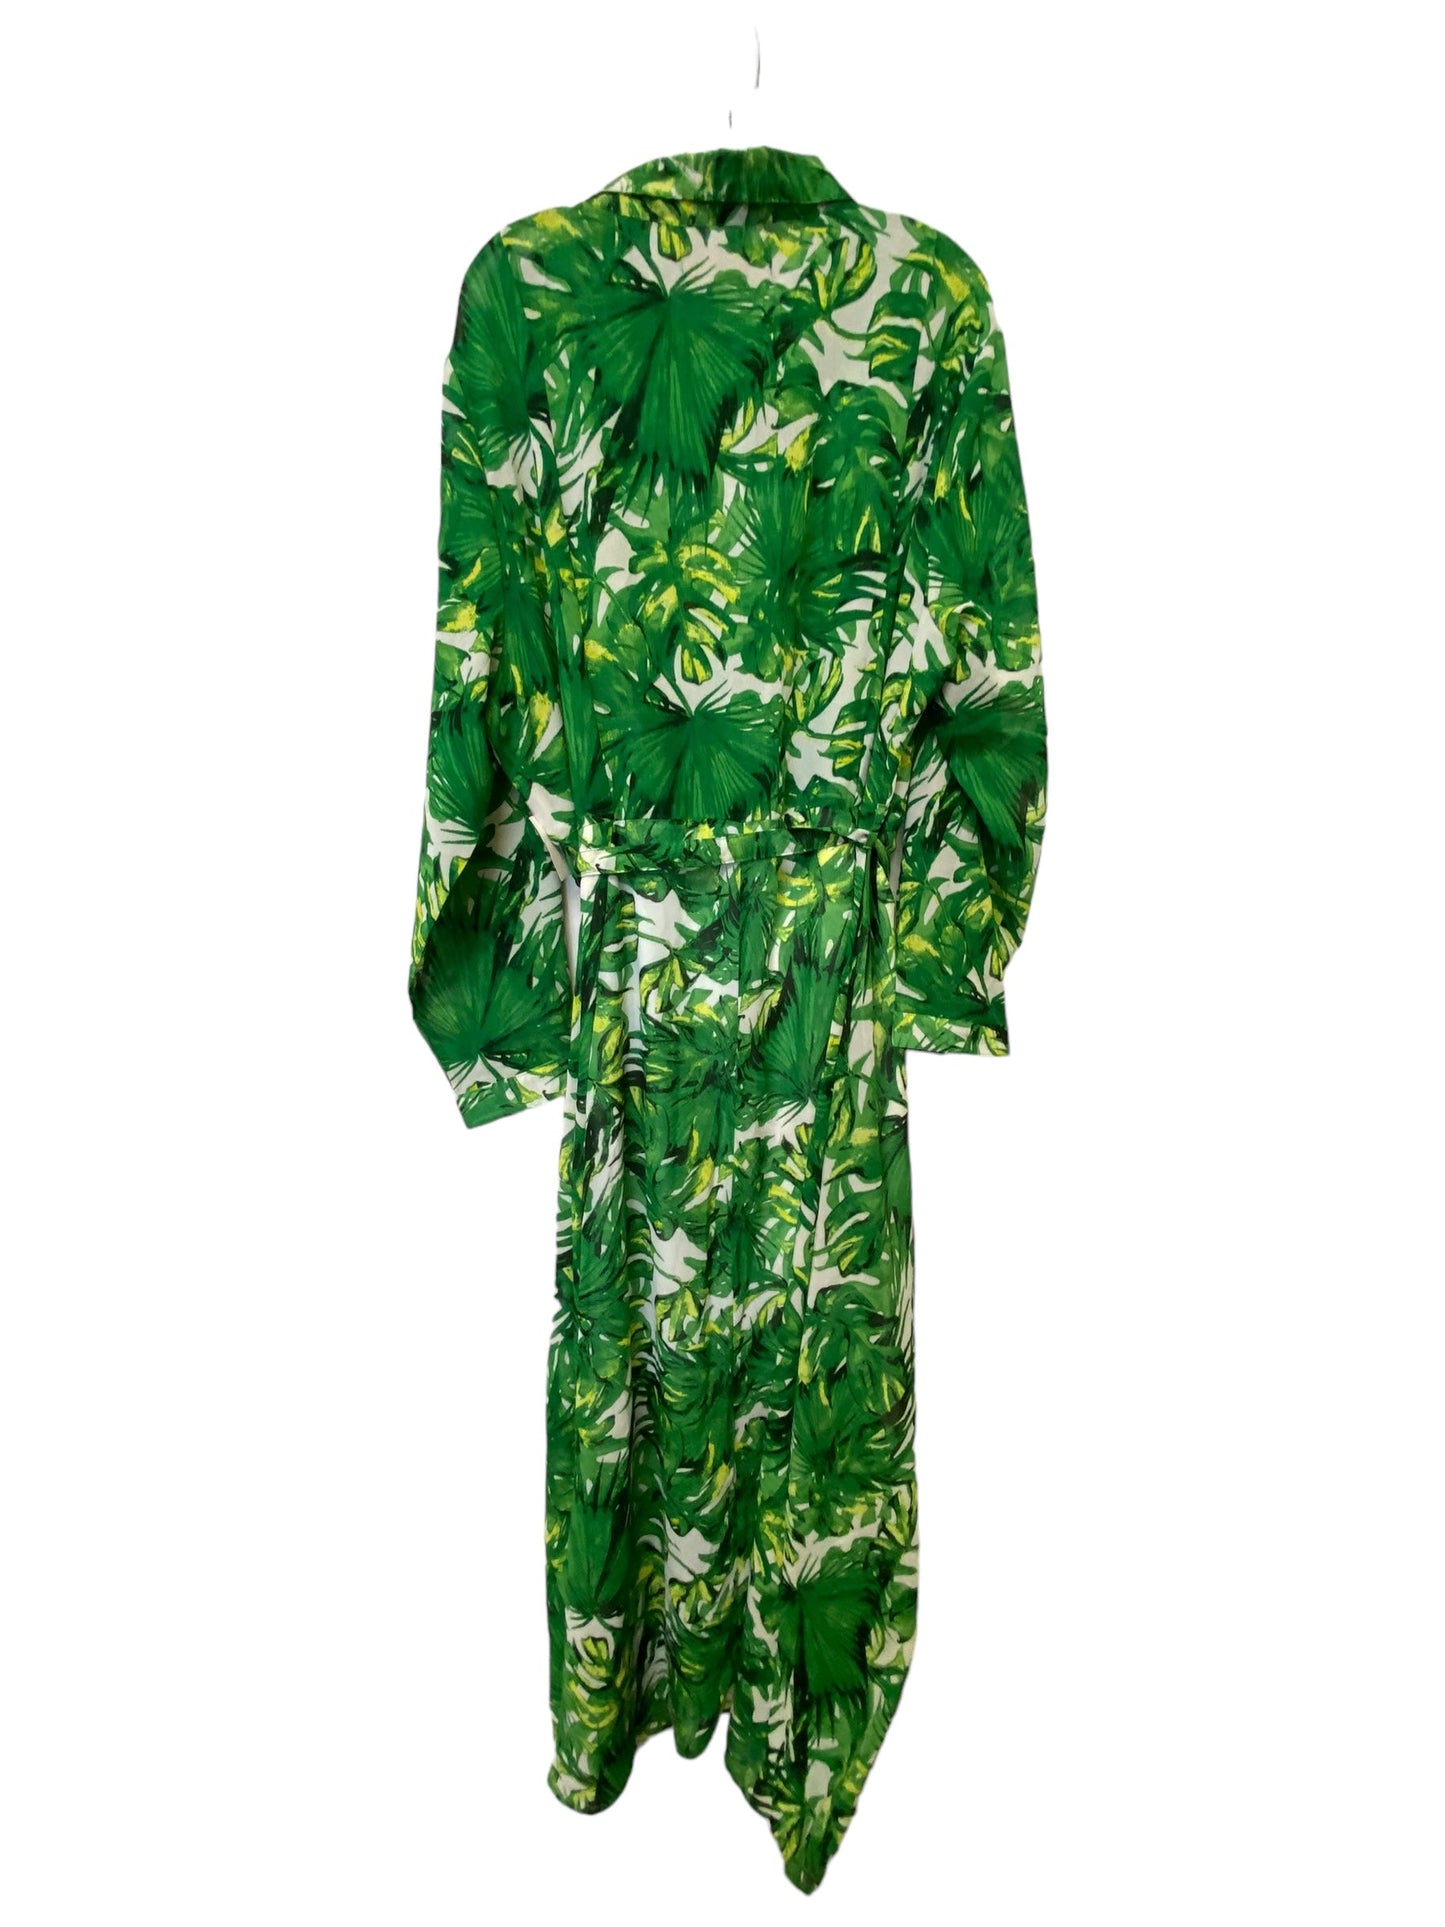 Green Dress Casual Maxi Clothes Mentor, Size 2x